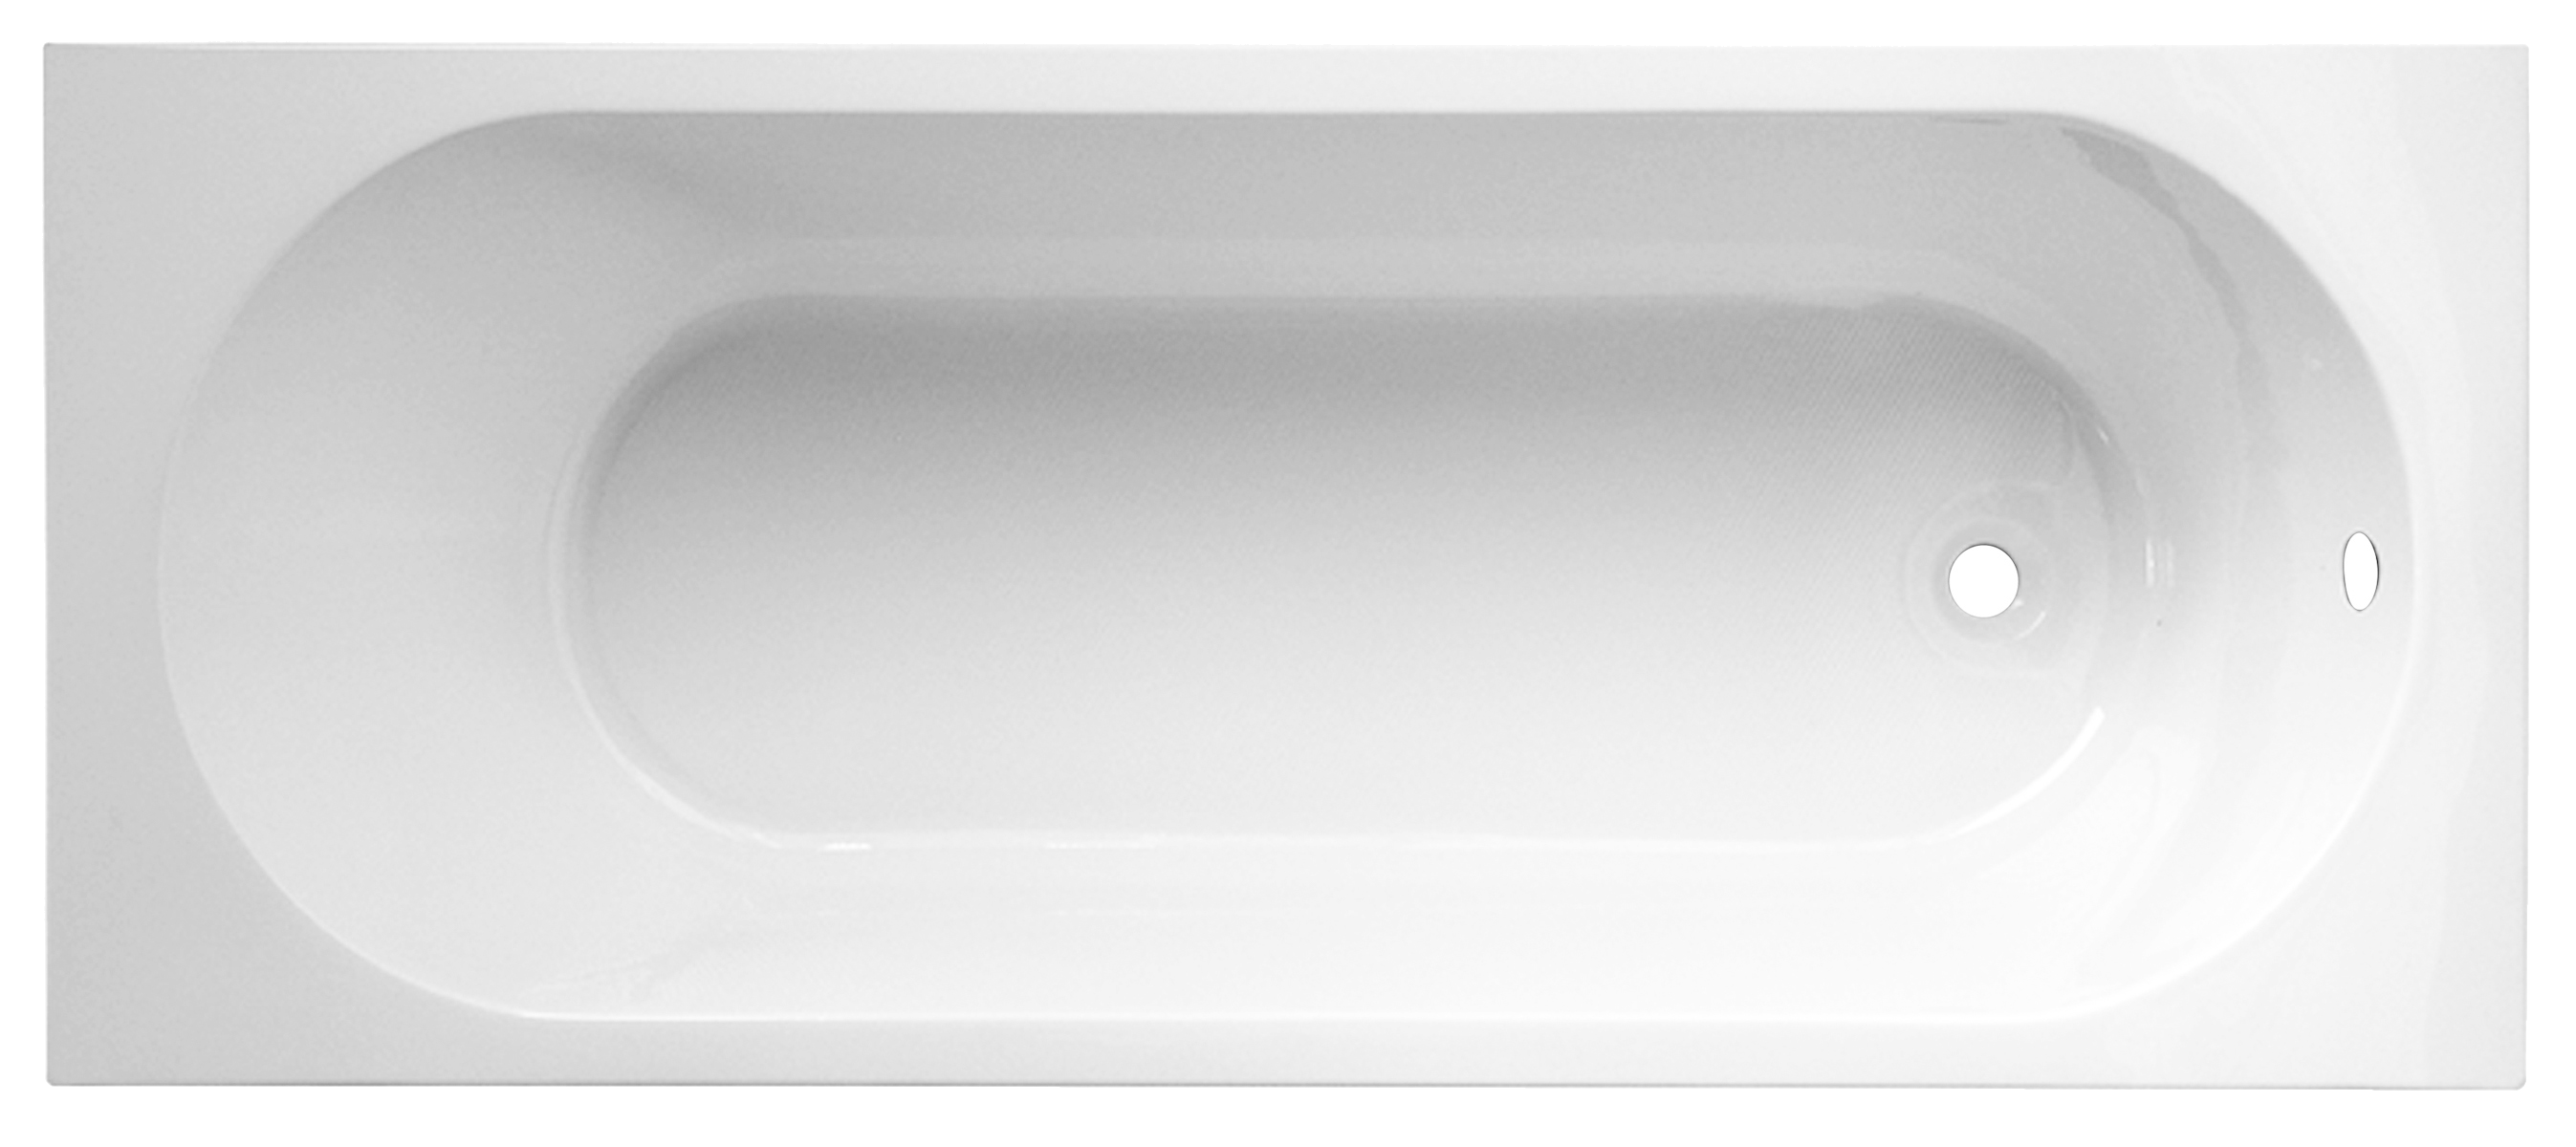 Bañera rectangular sanycces nerea 170x75x40 cm